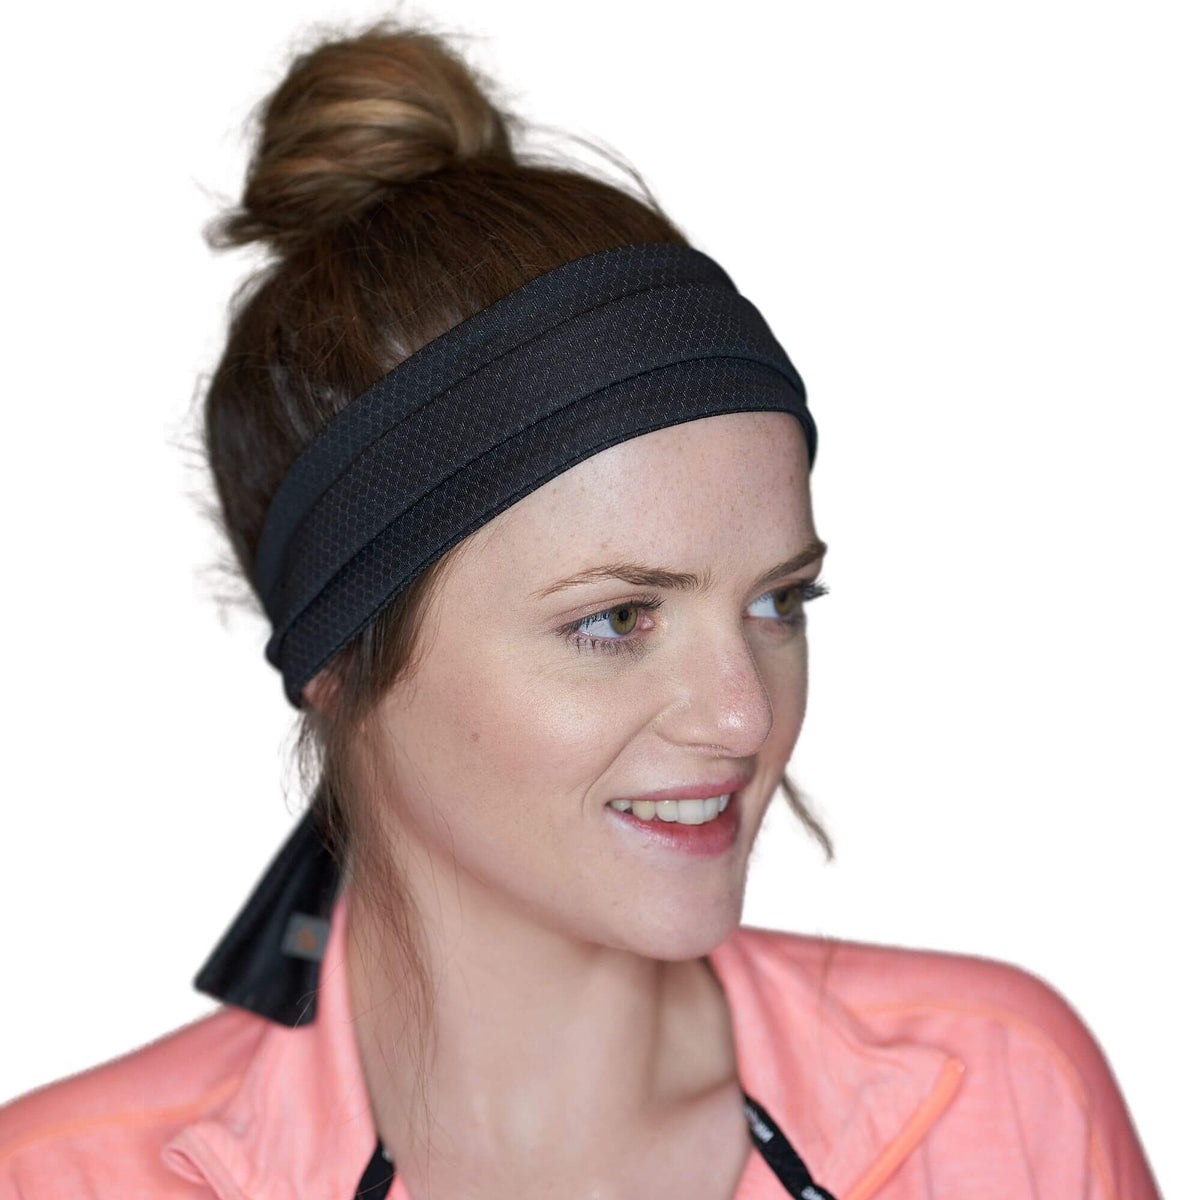 Tie Behind Sports Headbands, Adjustable Sweatband